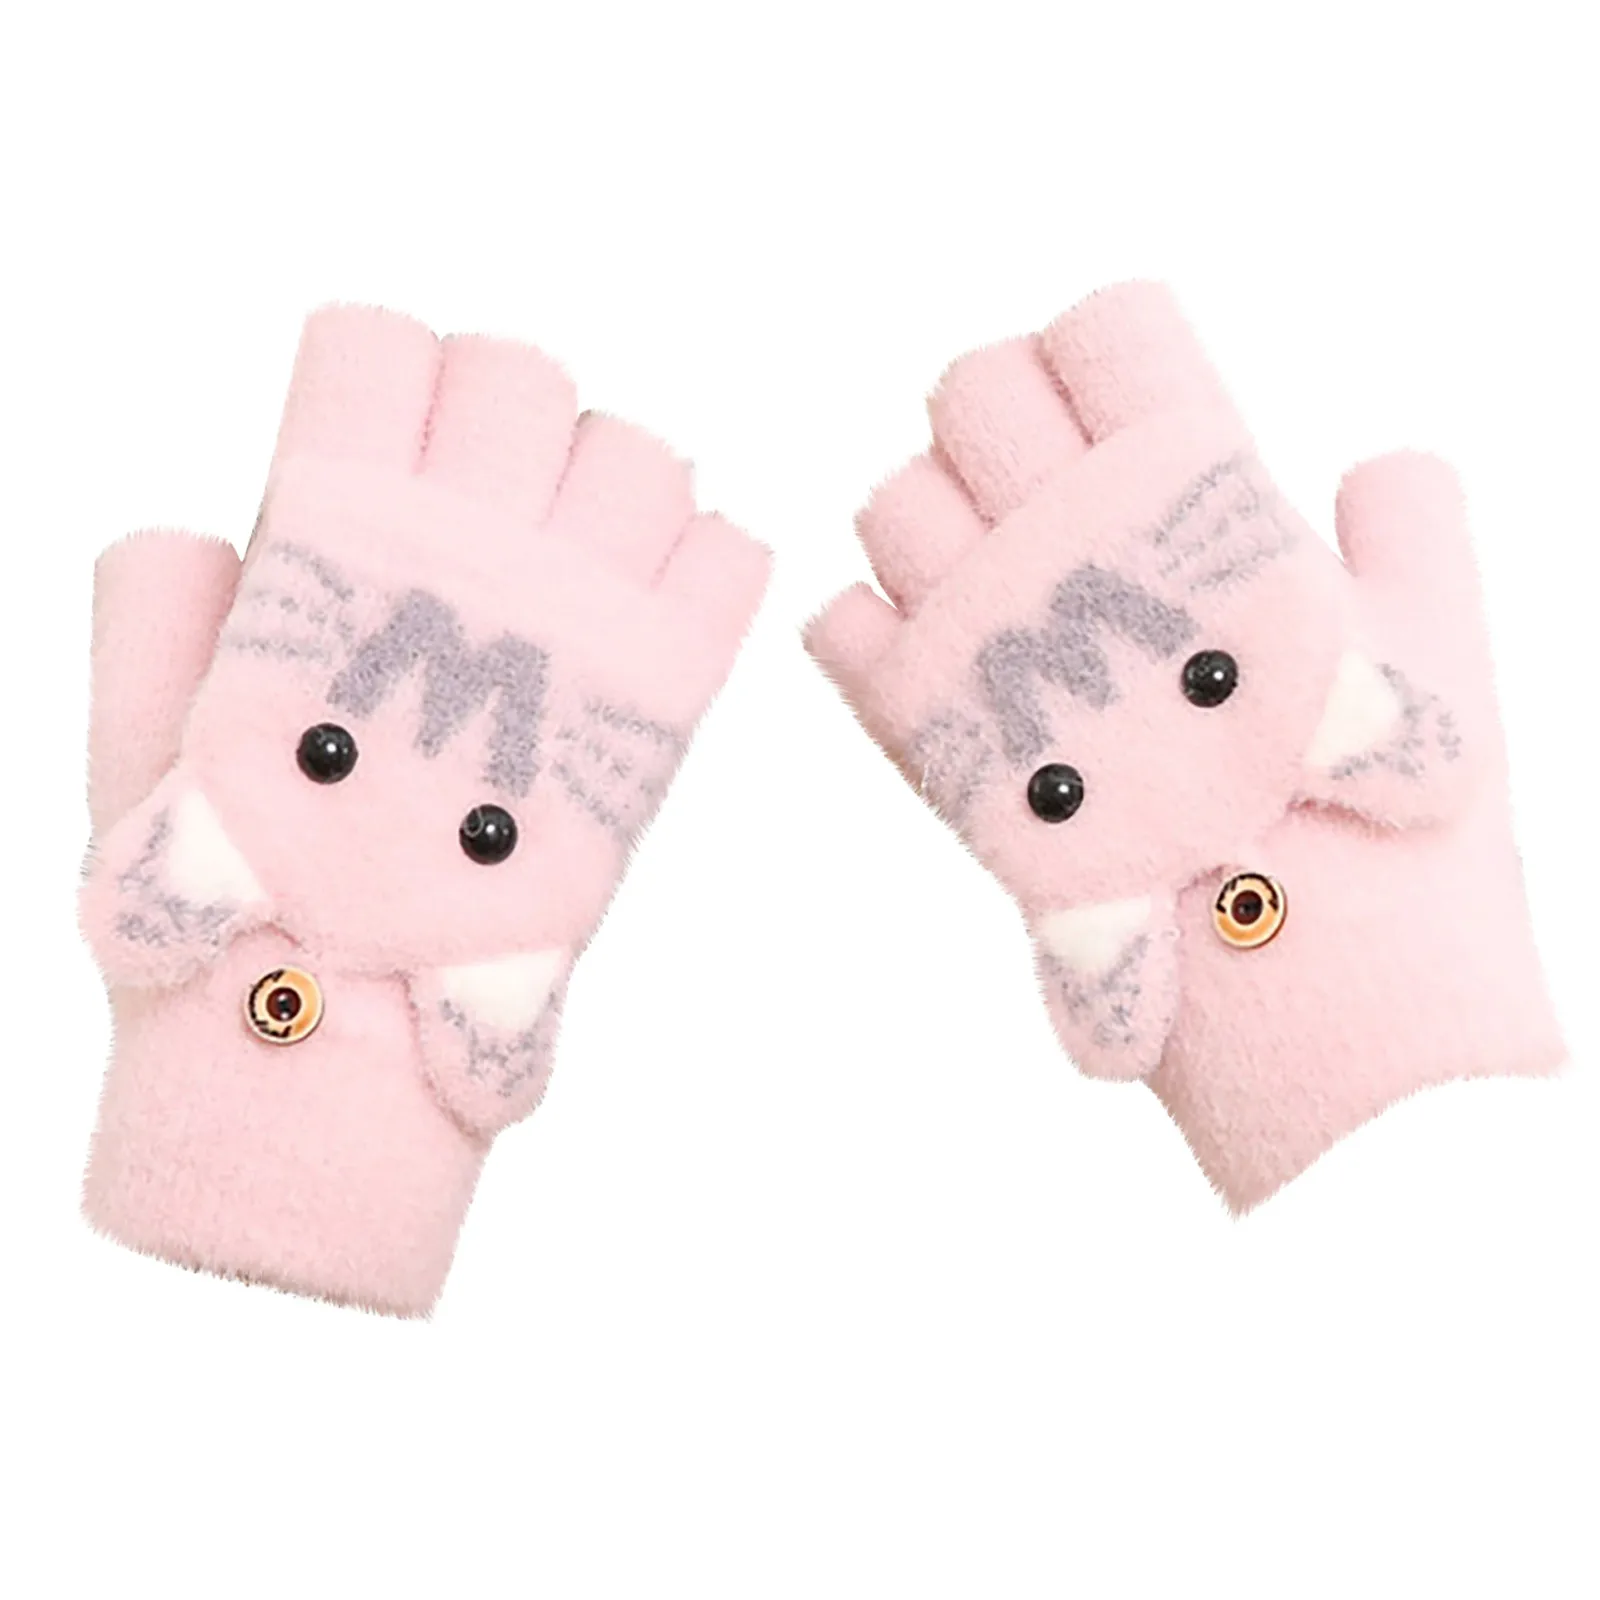 Зимна мода жена поддържа топло кашмир любов тъкат плетени ръкавици мода сензорен екран плетени ръкавици Guantes Invierno Hombre